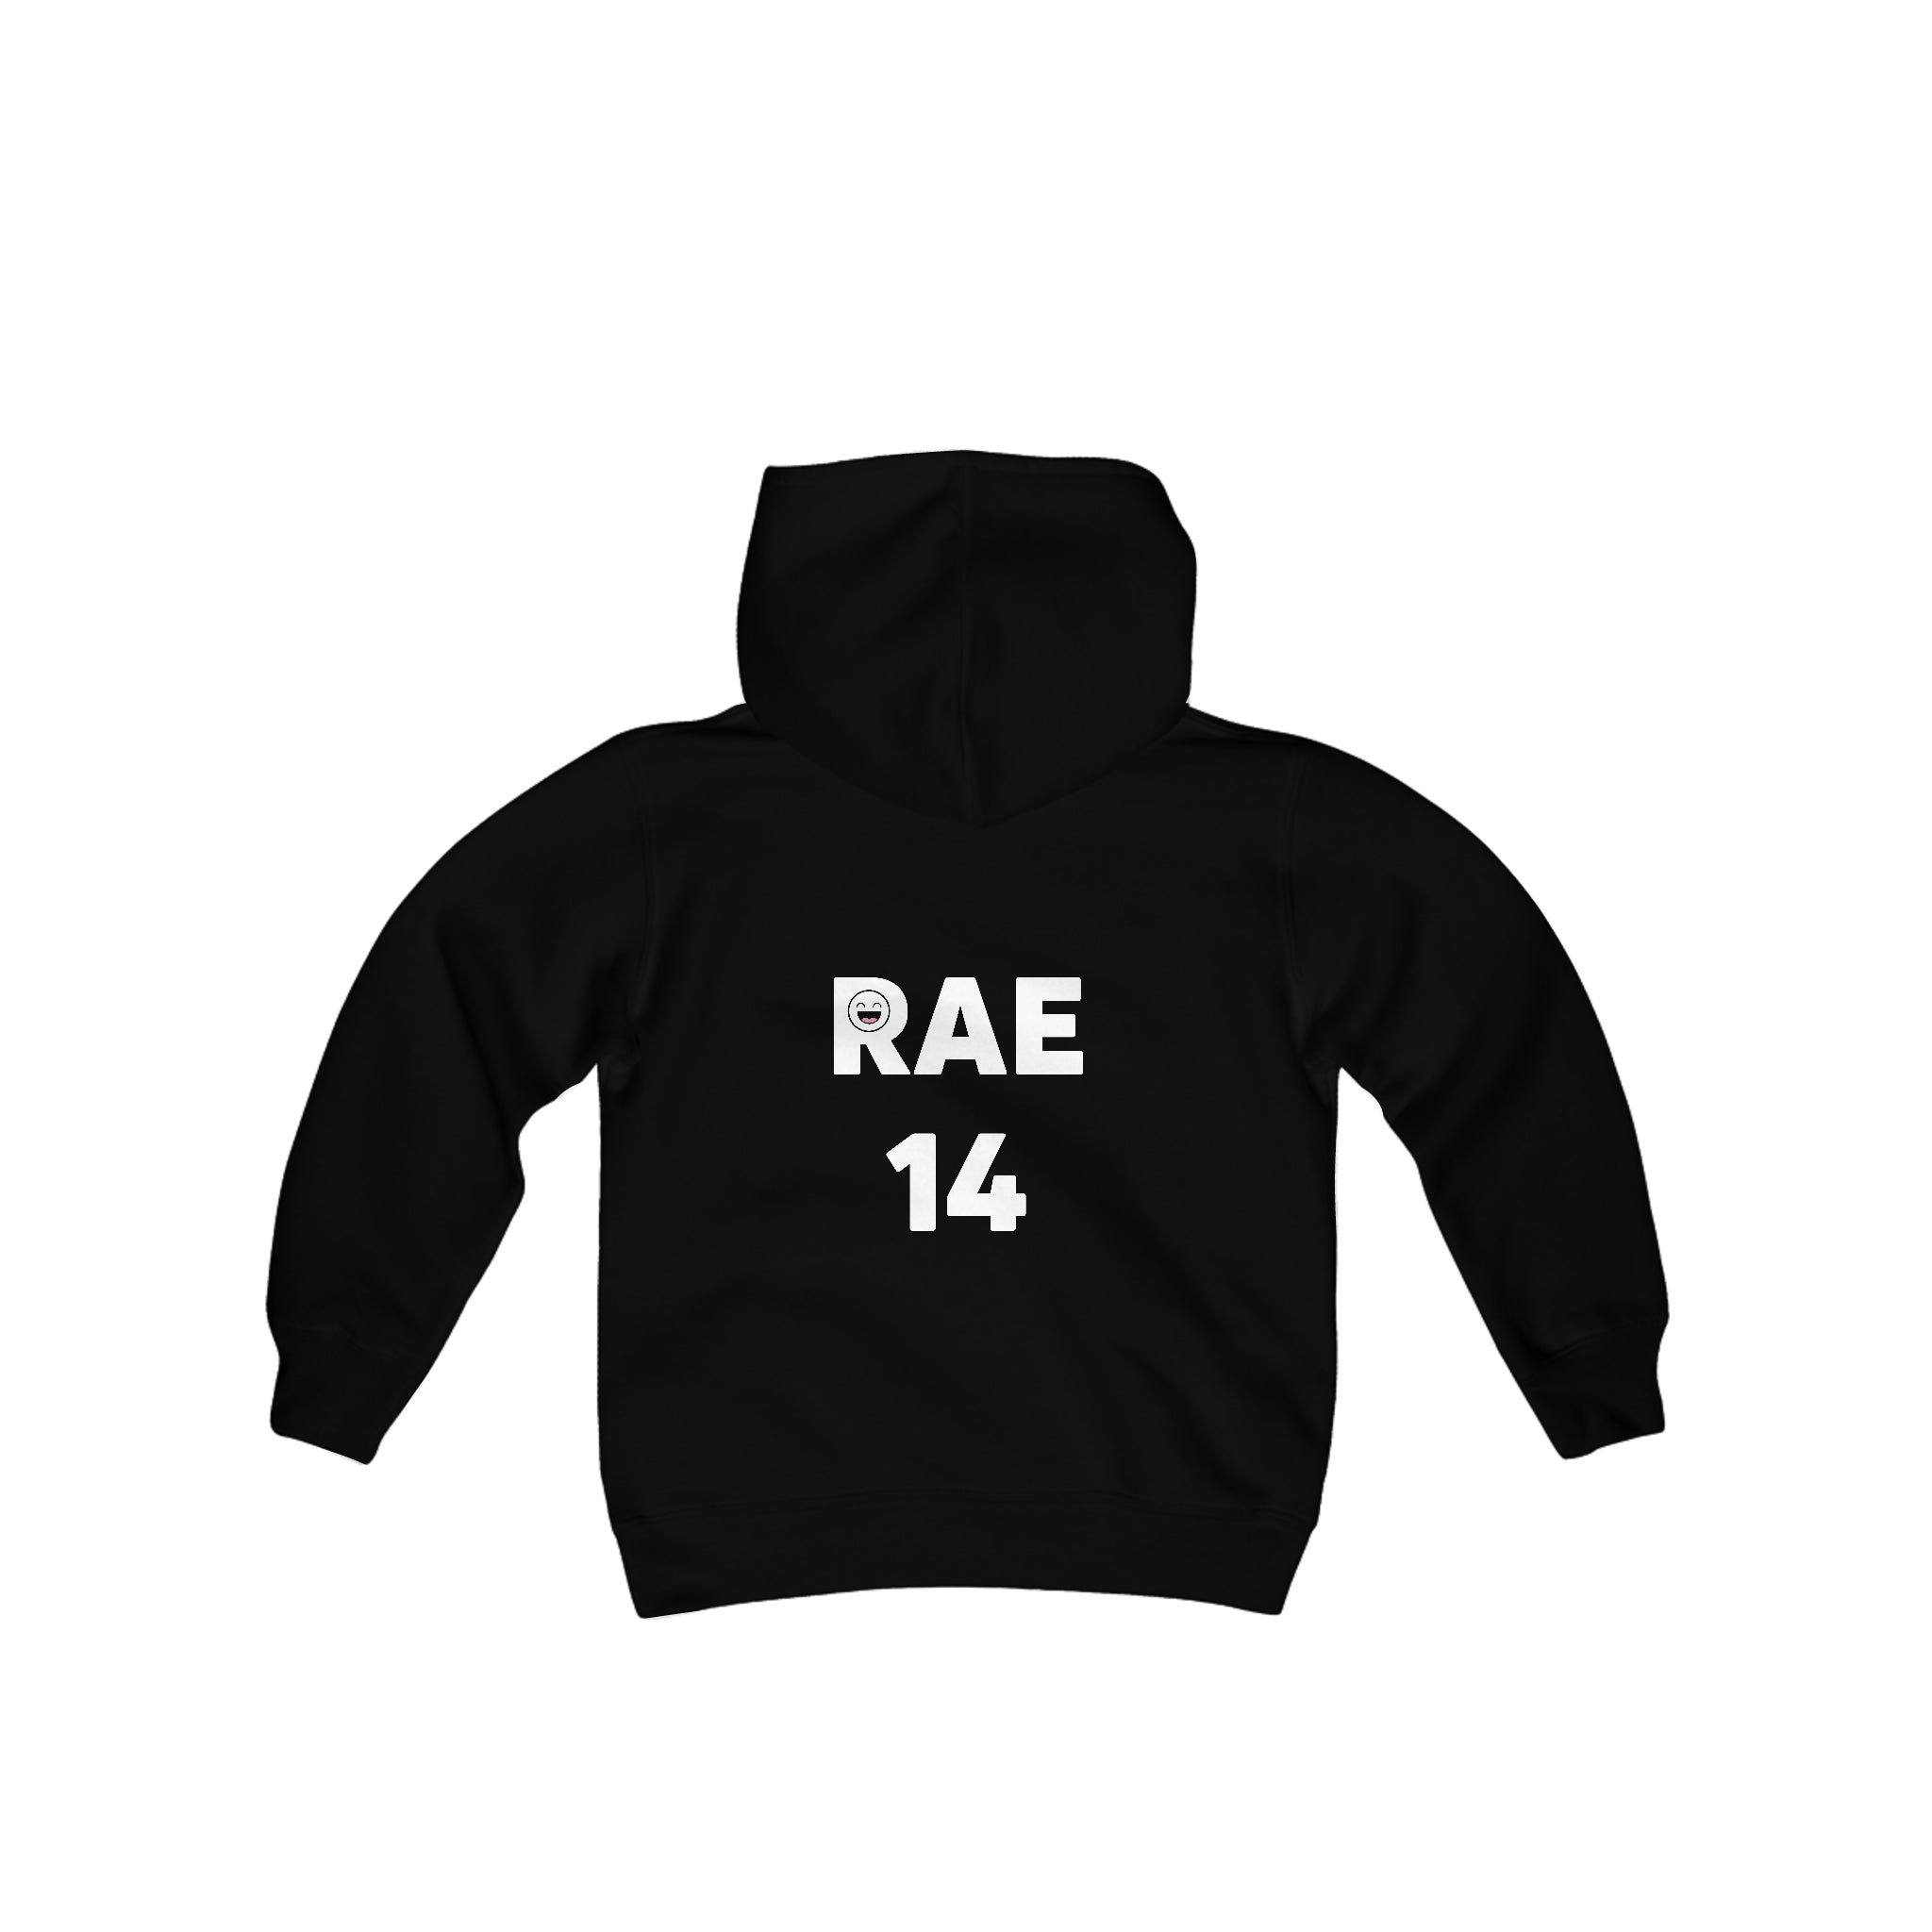 Rae Youth Heavy Blend Hooded Sweatshirt